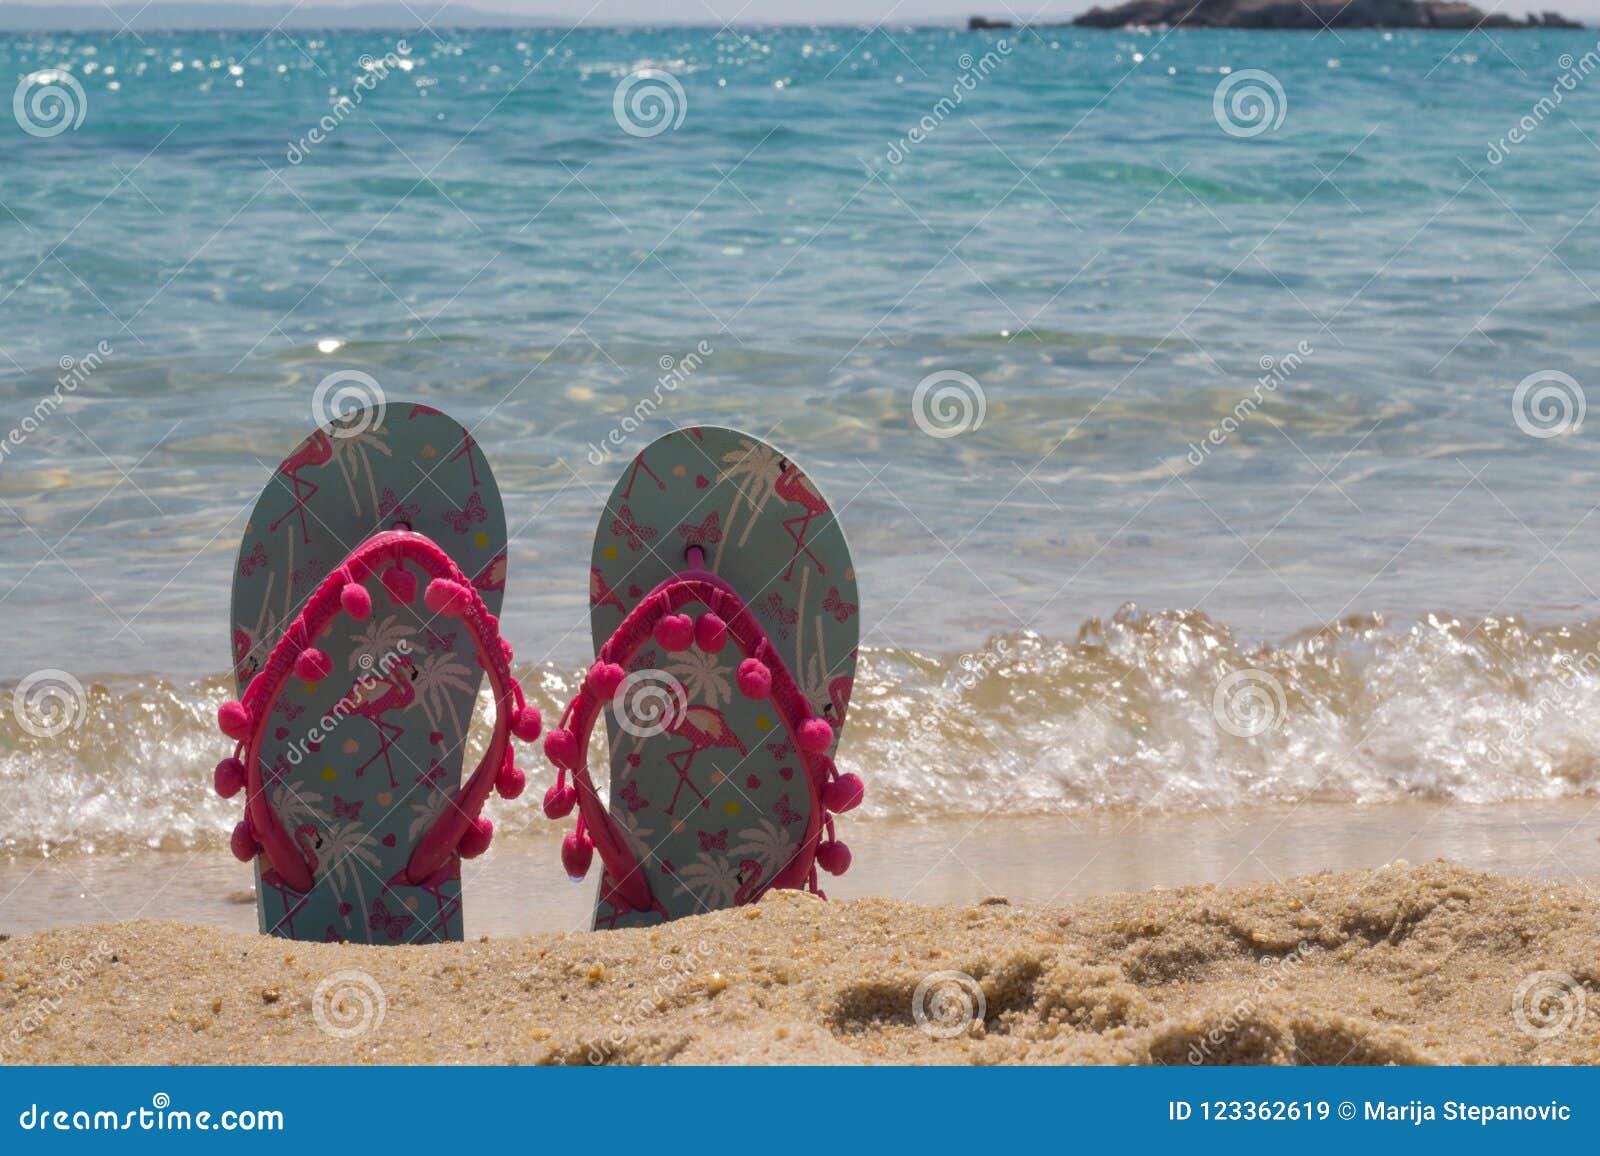 sea slippers